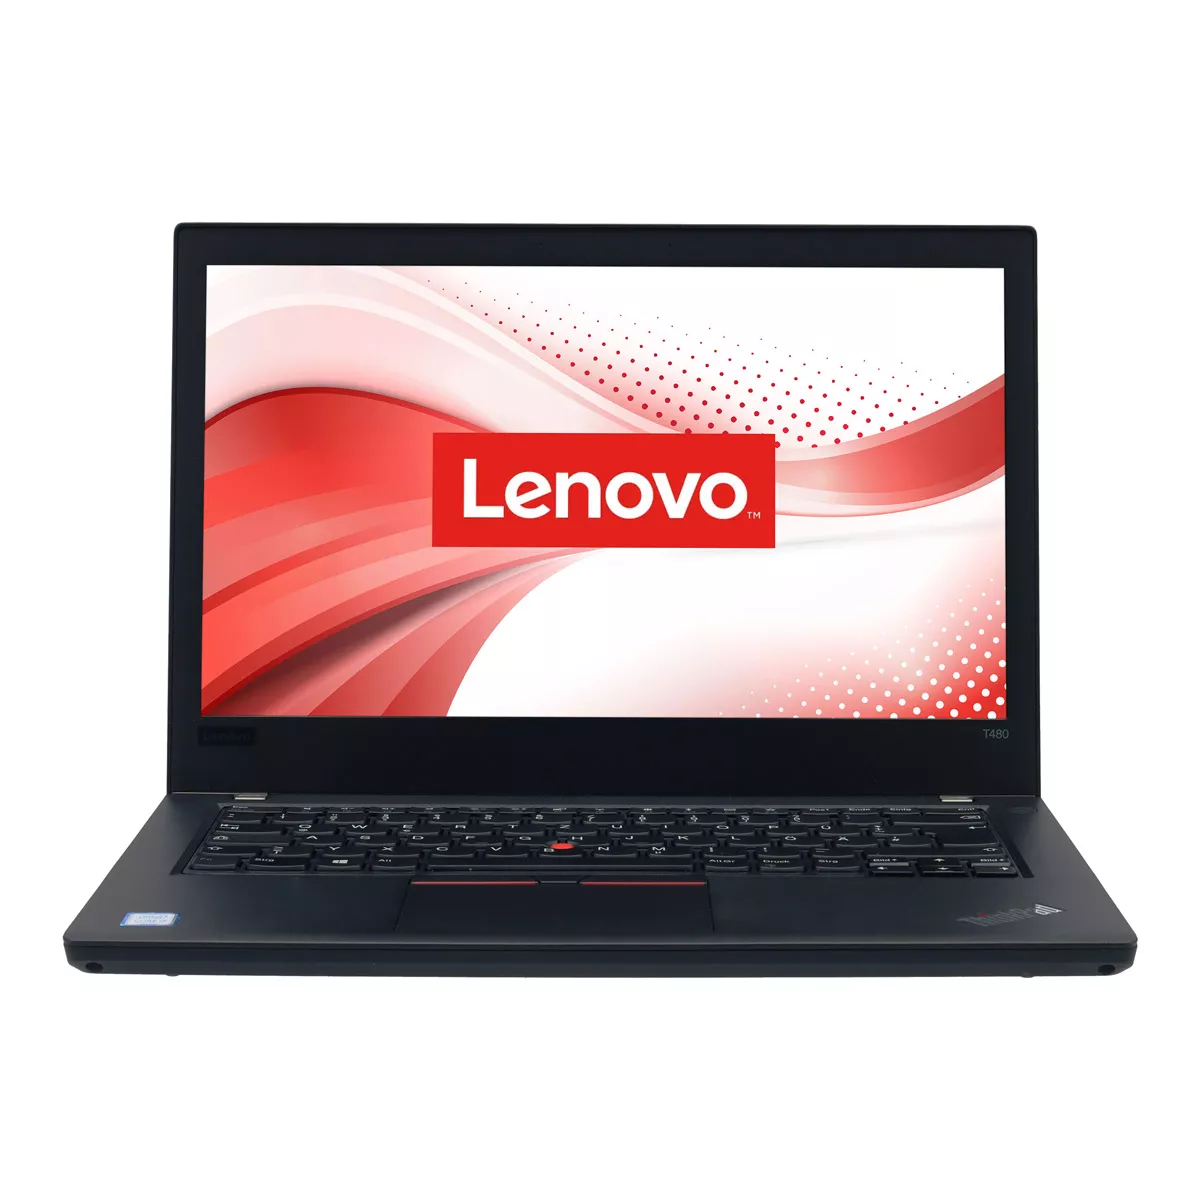 Lenovo ThinkPad T480 Core i5 8350U Full-HD 240 GB M.2 SSD Webcam A+